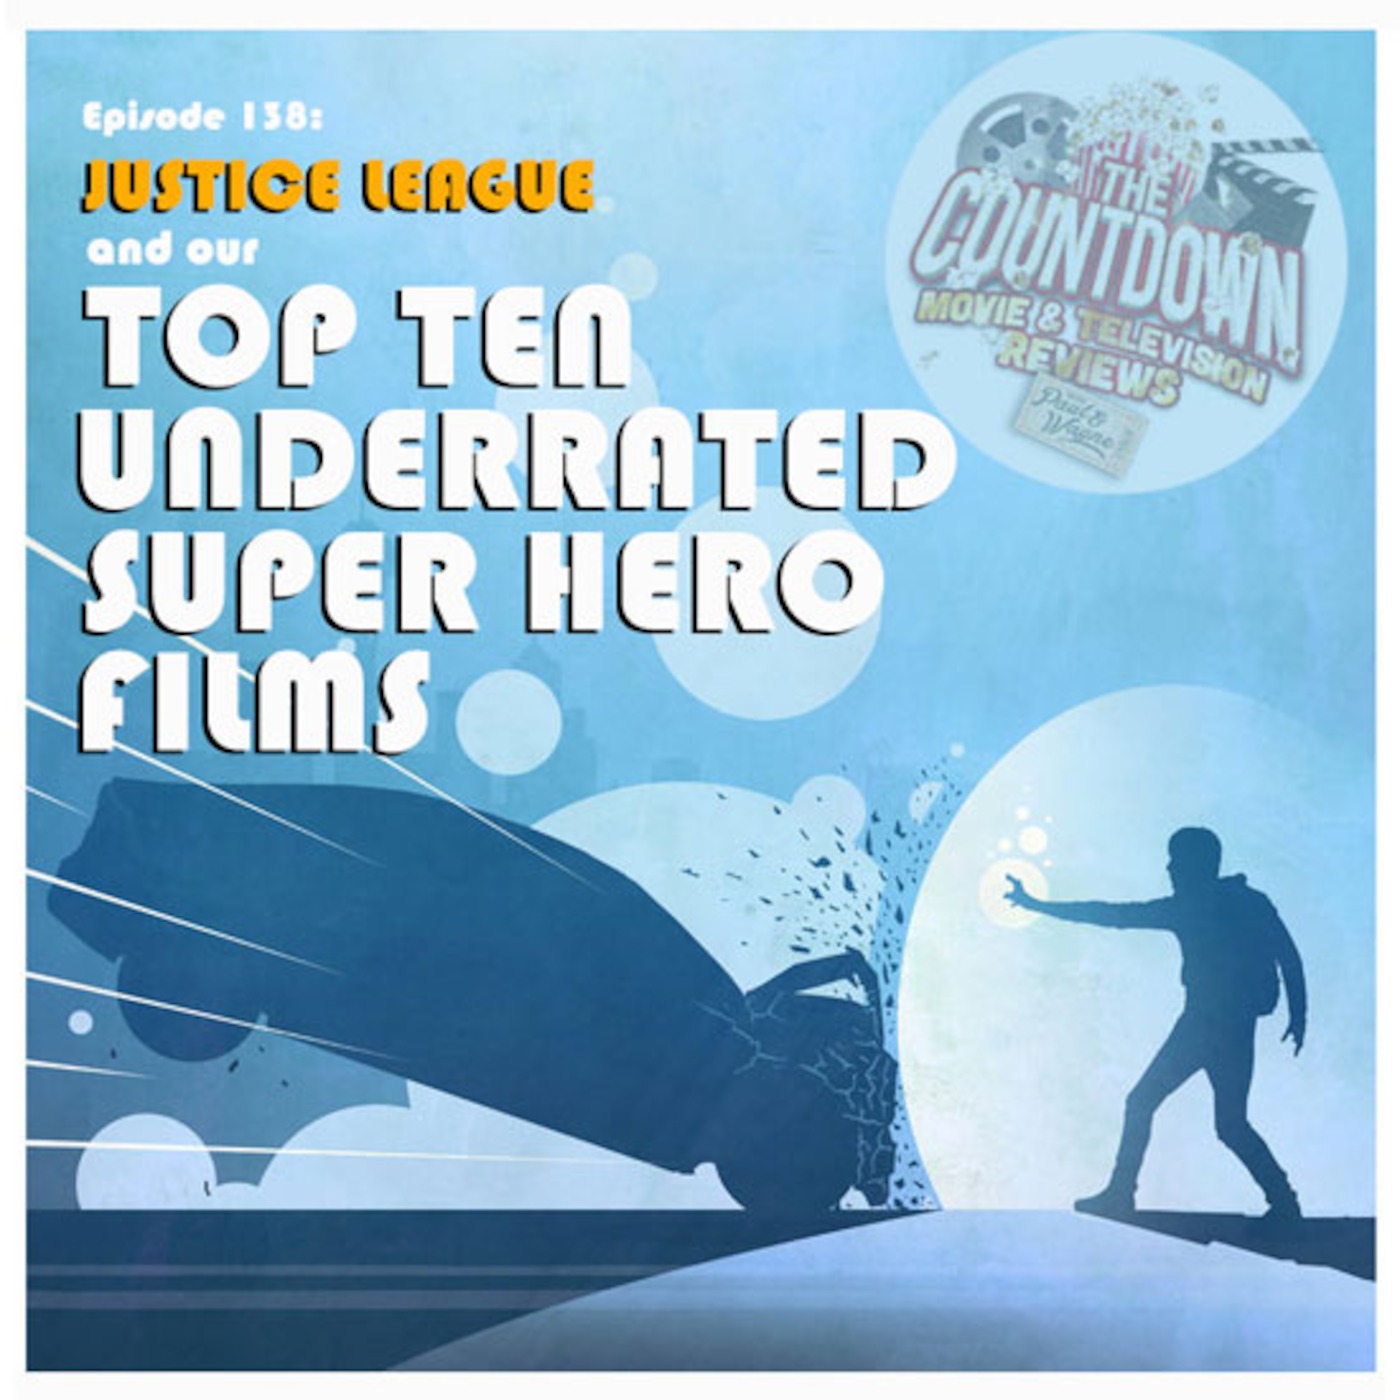 Episode 138: Top 10 Underrated Superhero Films / Justice League